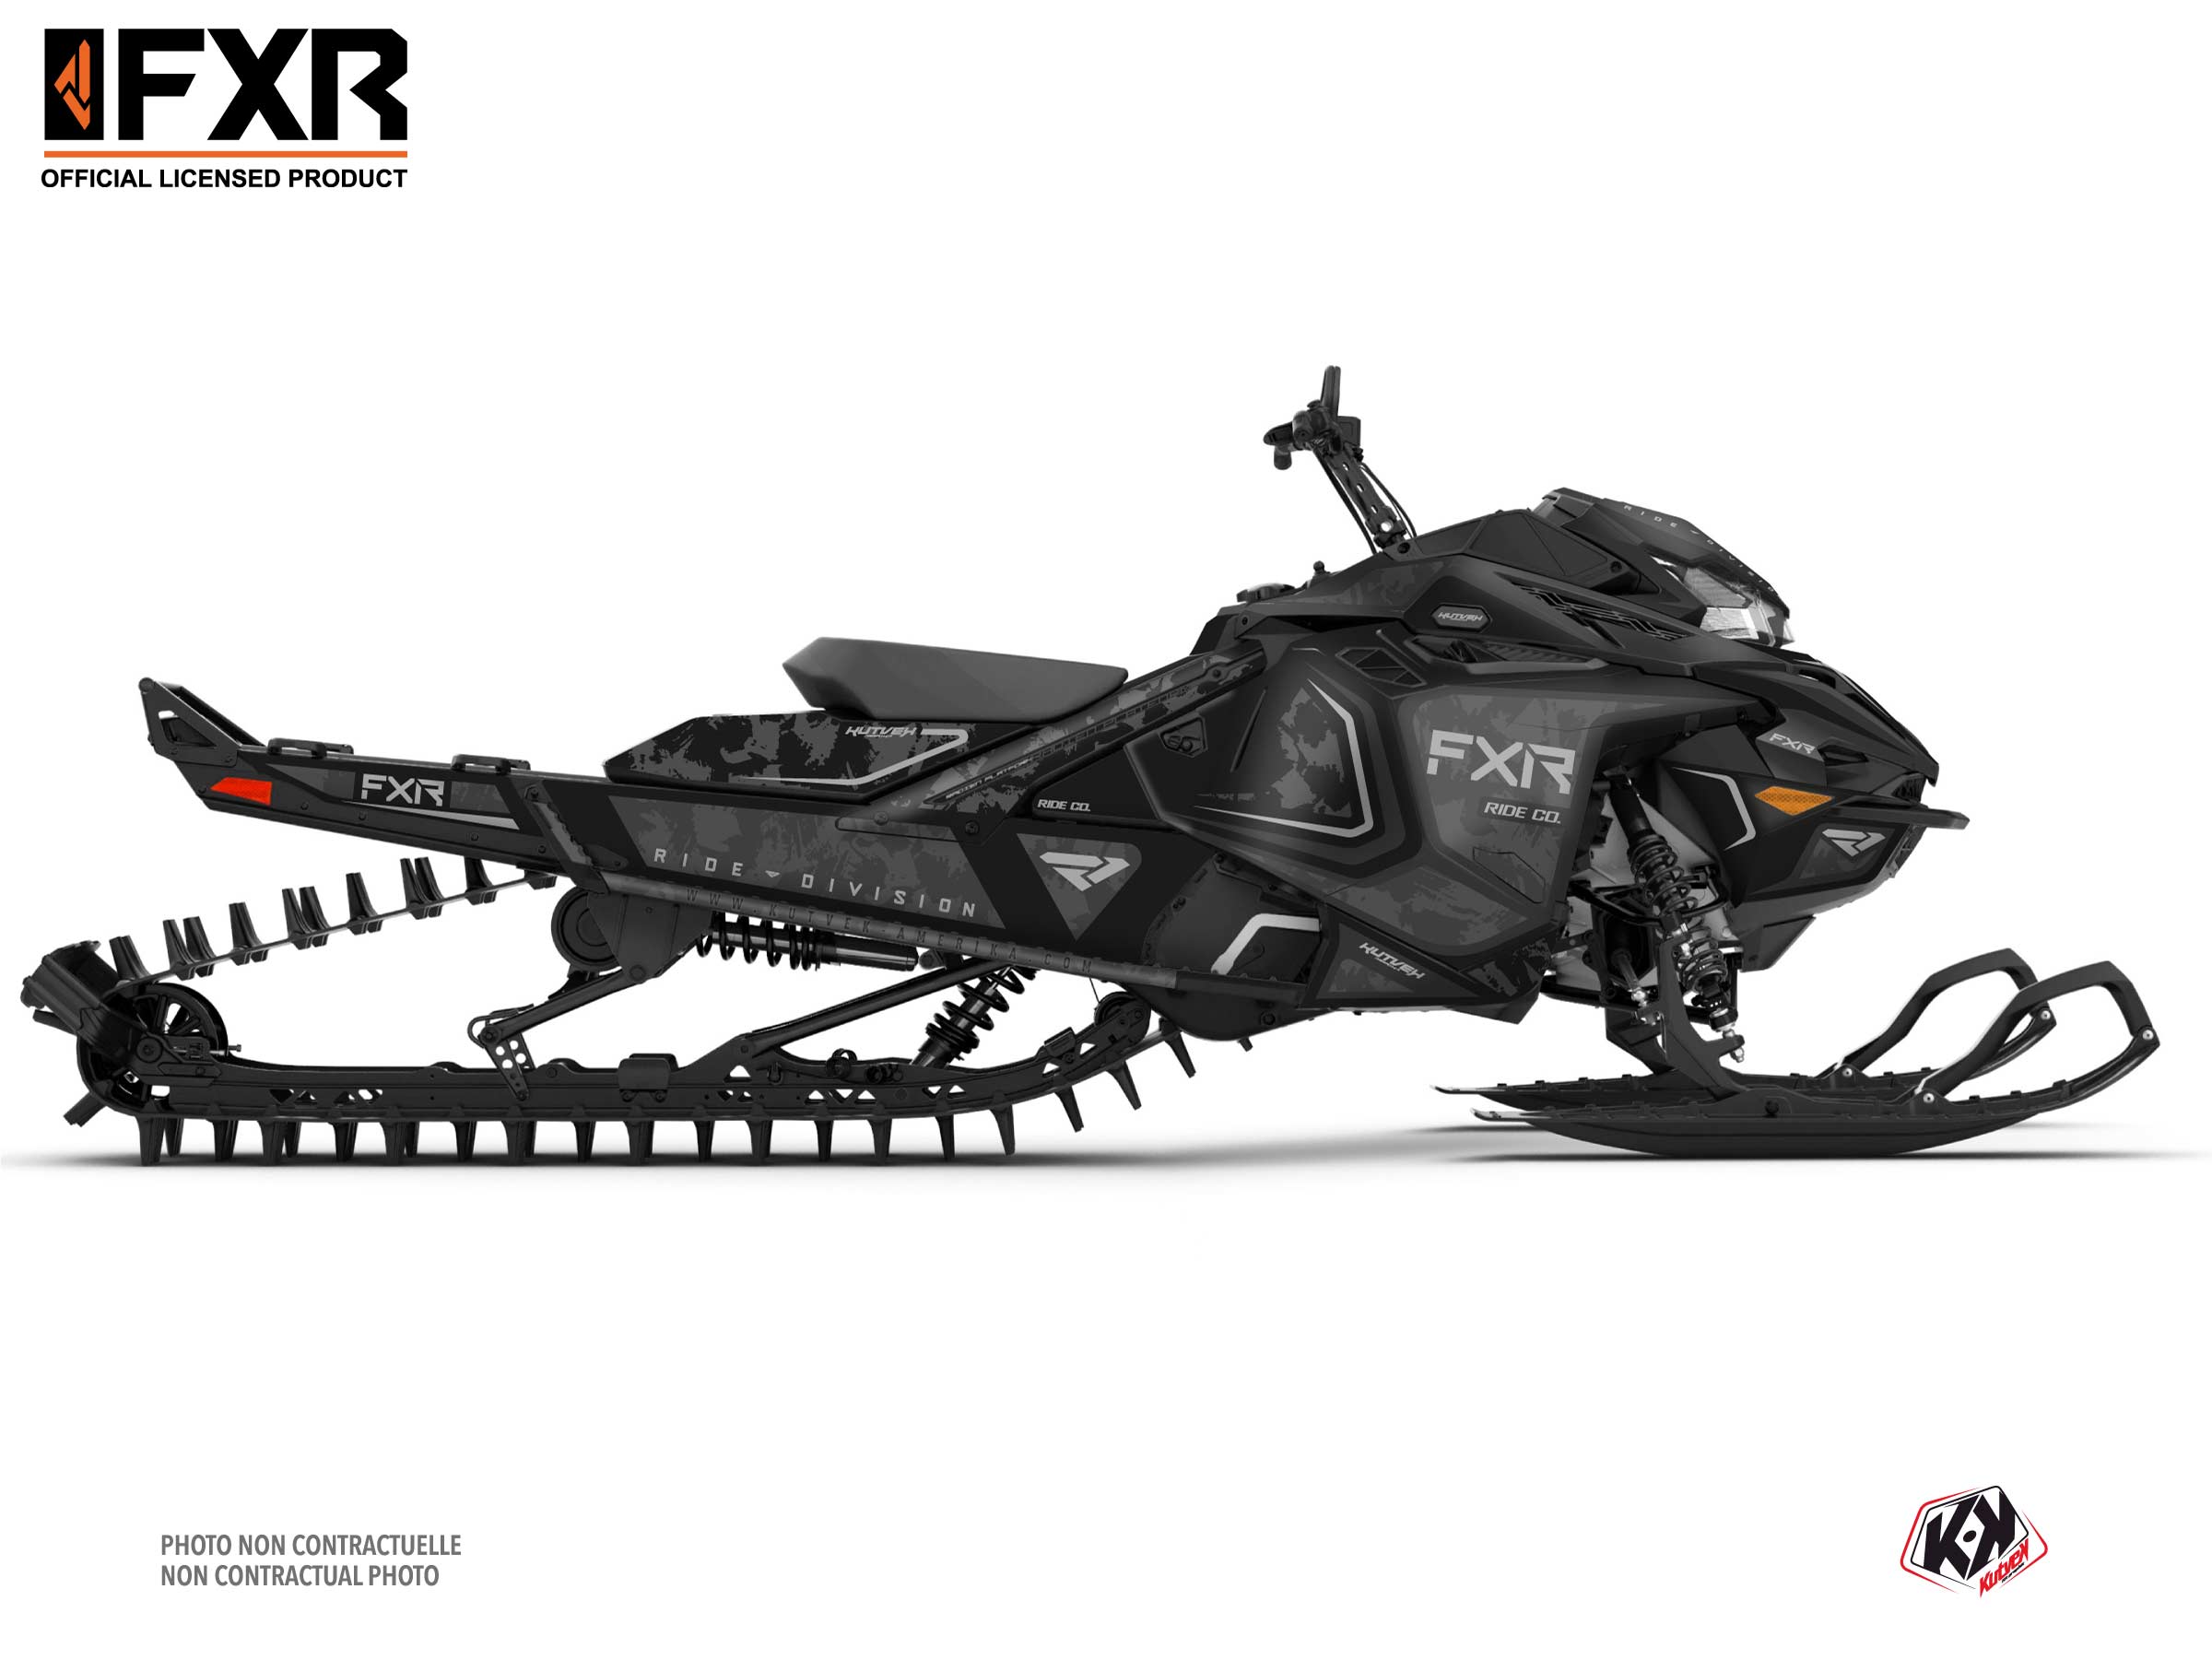 lynx snowmobile likens serie graphic kit